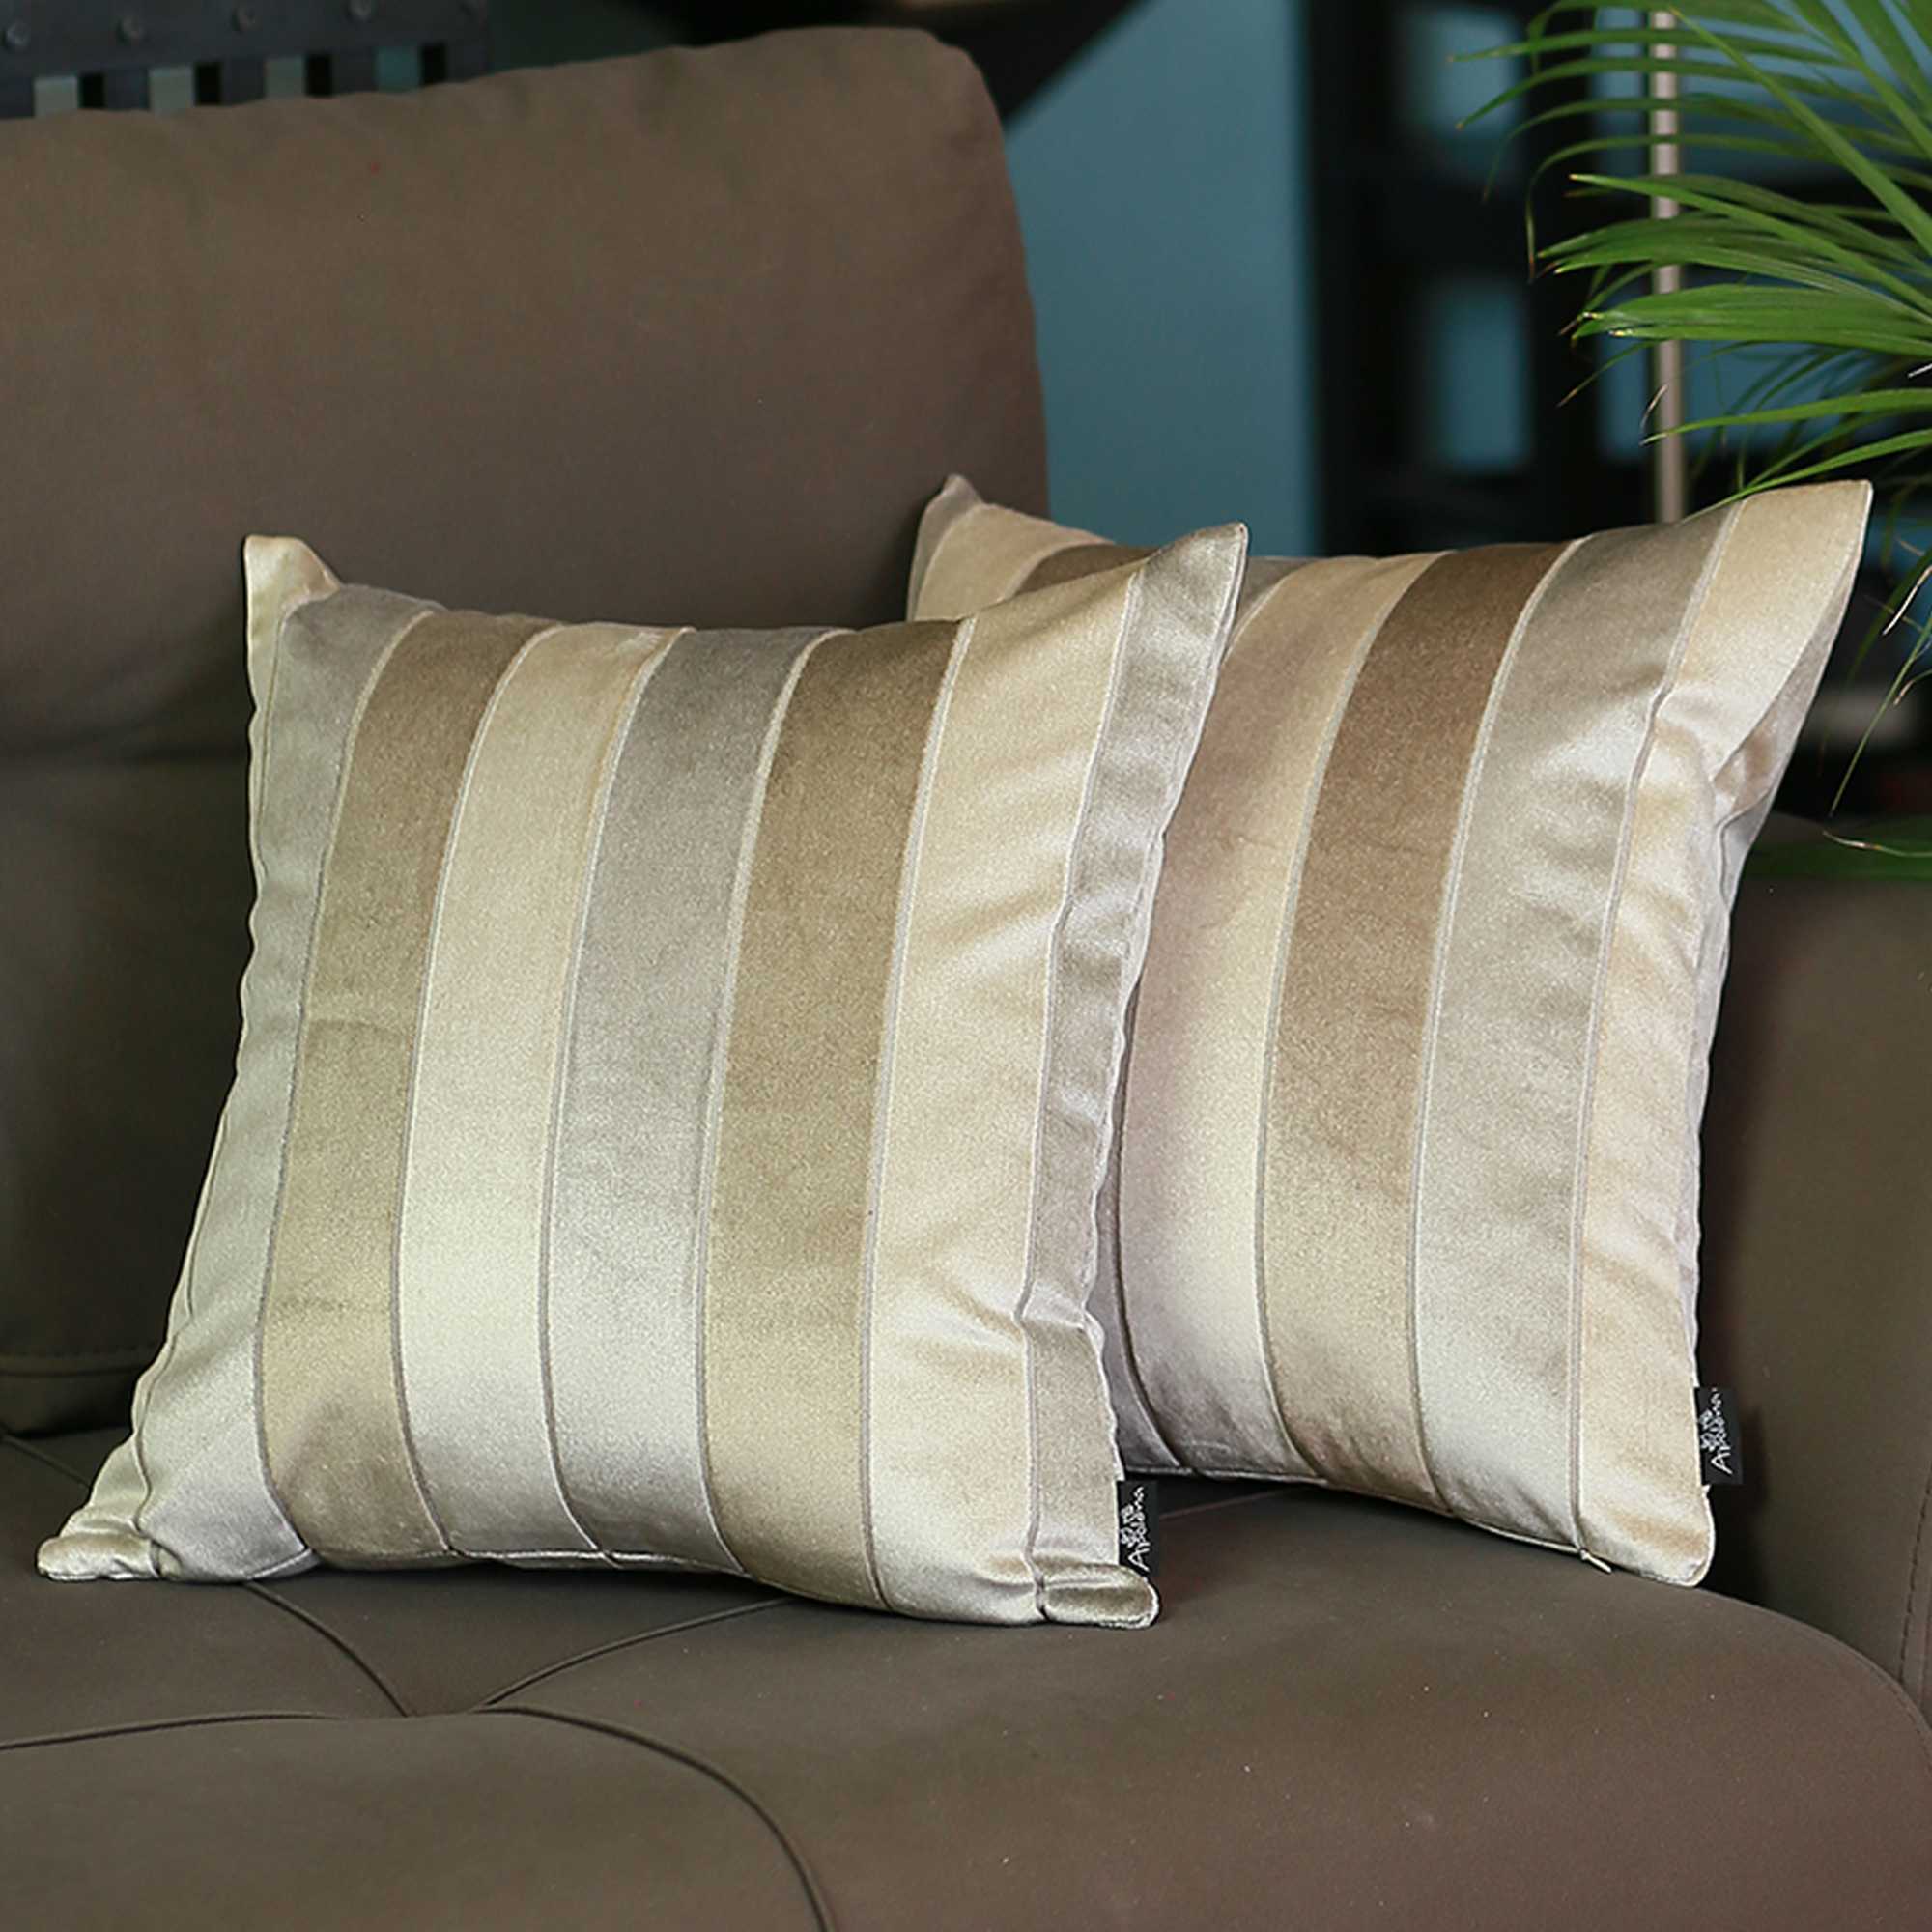 17"x17"Brown Velvet Luxurious Throw Decorative Pillow Case Set of 2 pcs Square